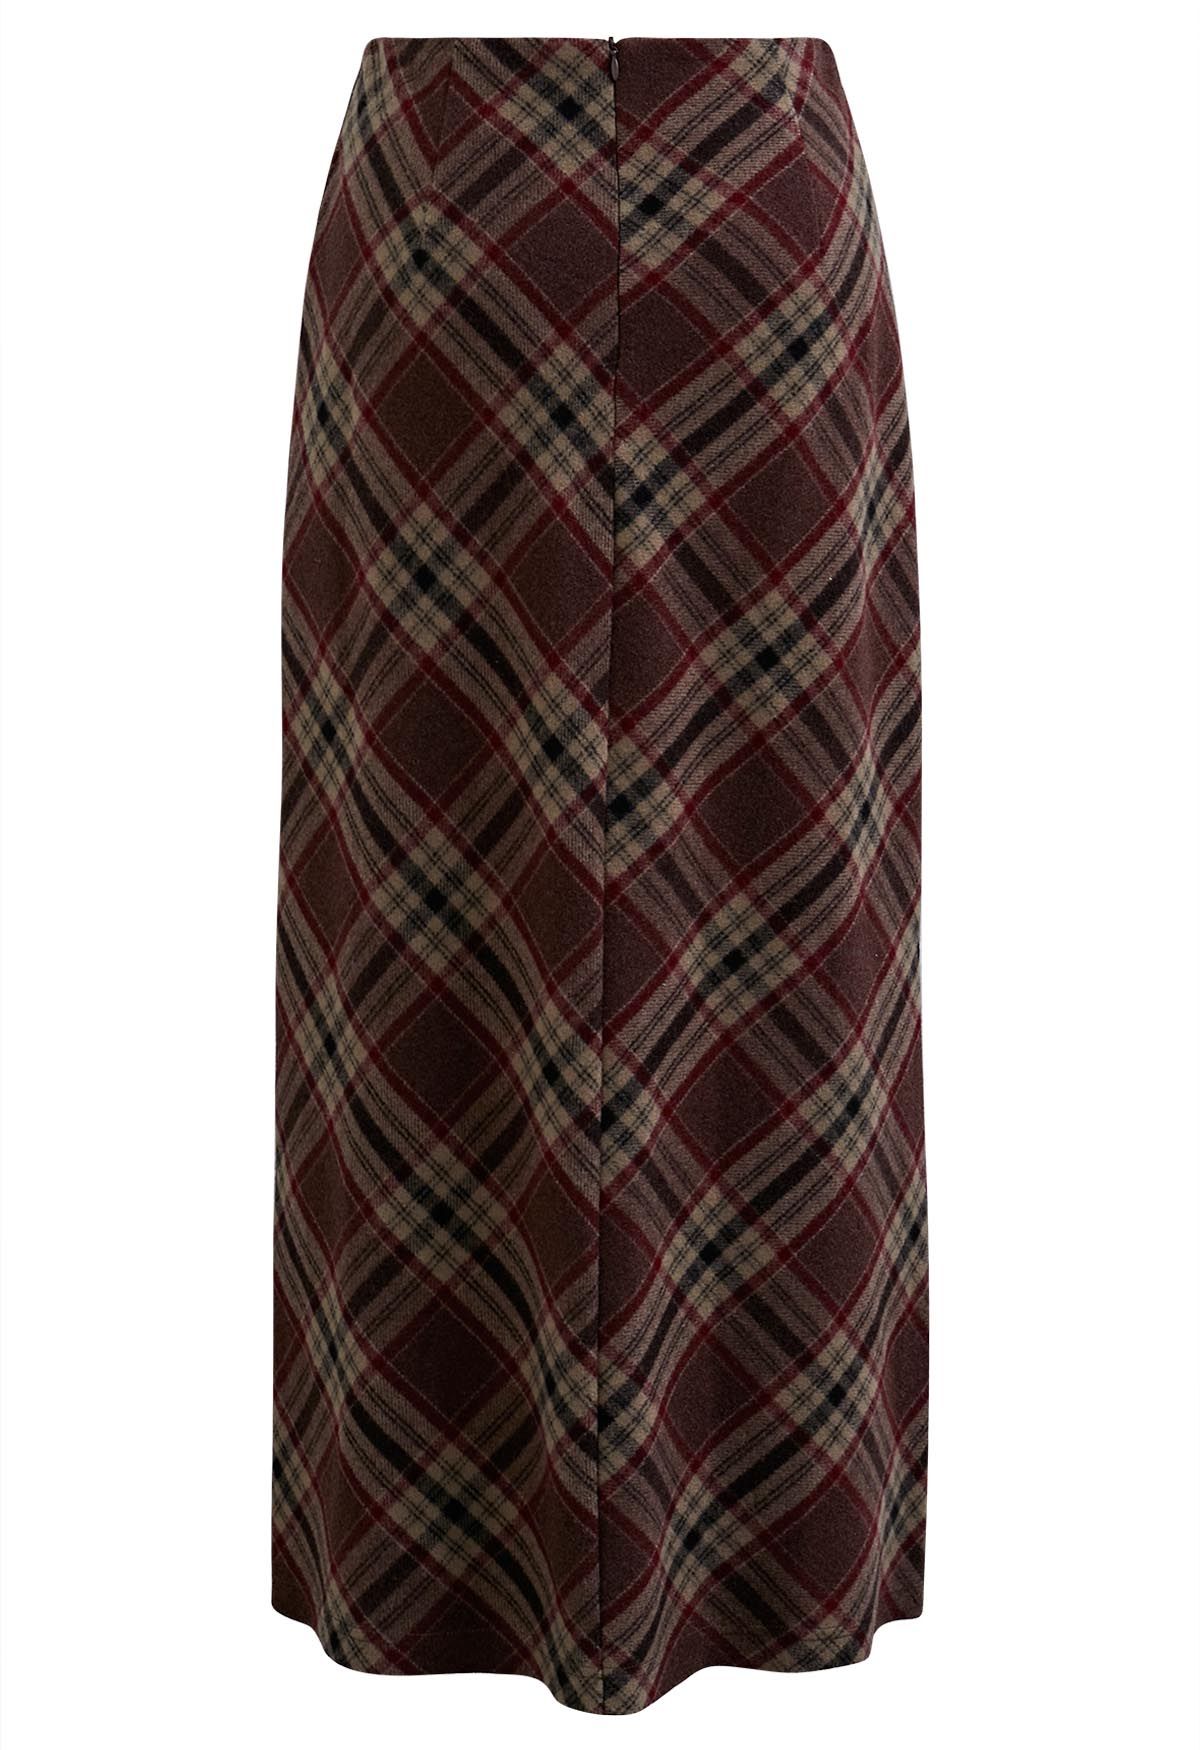 Maillard Style Plaid Wool-Blend Skirt